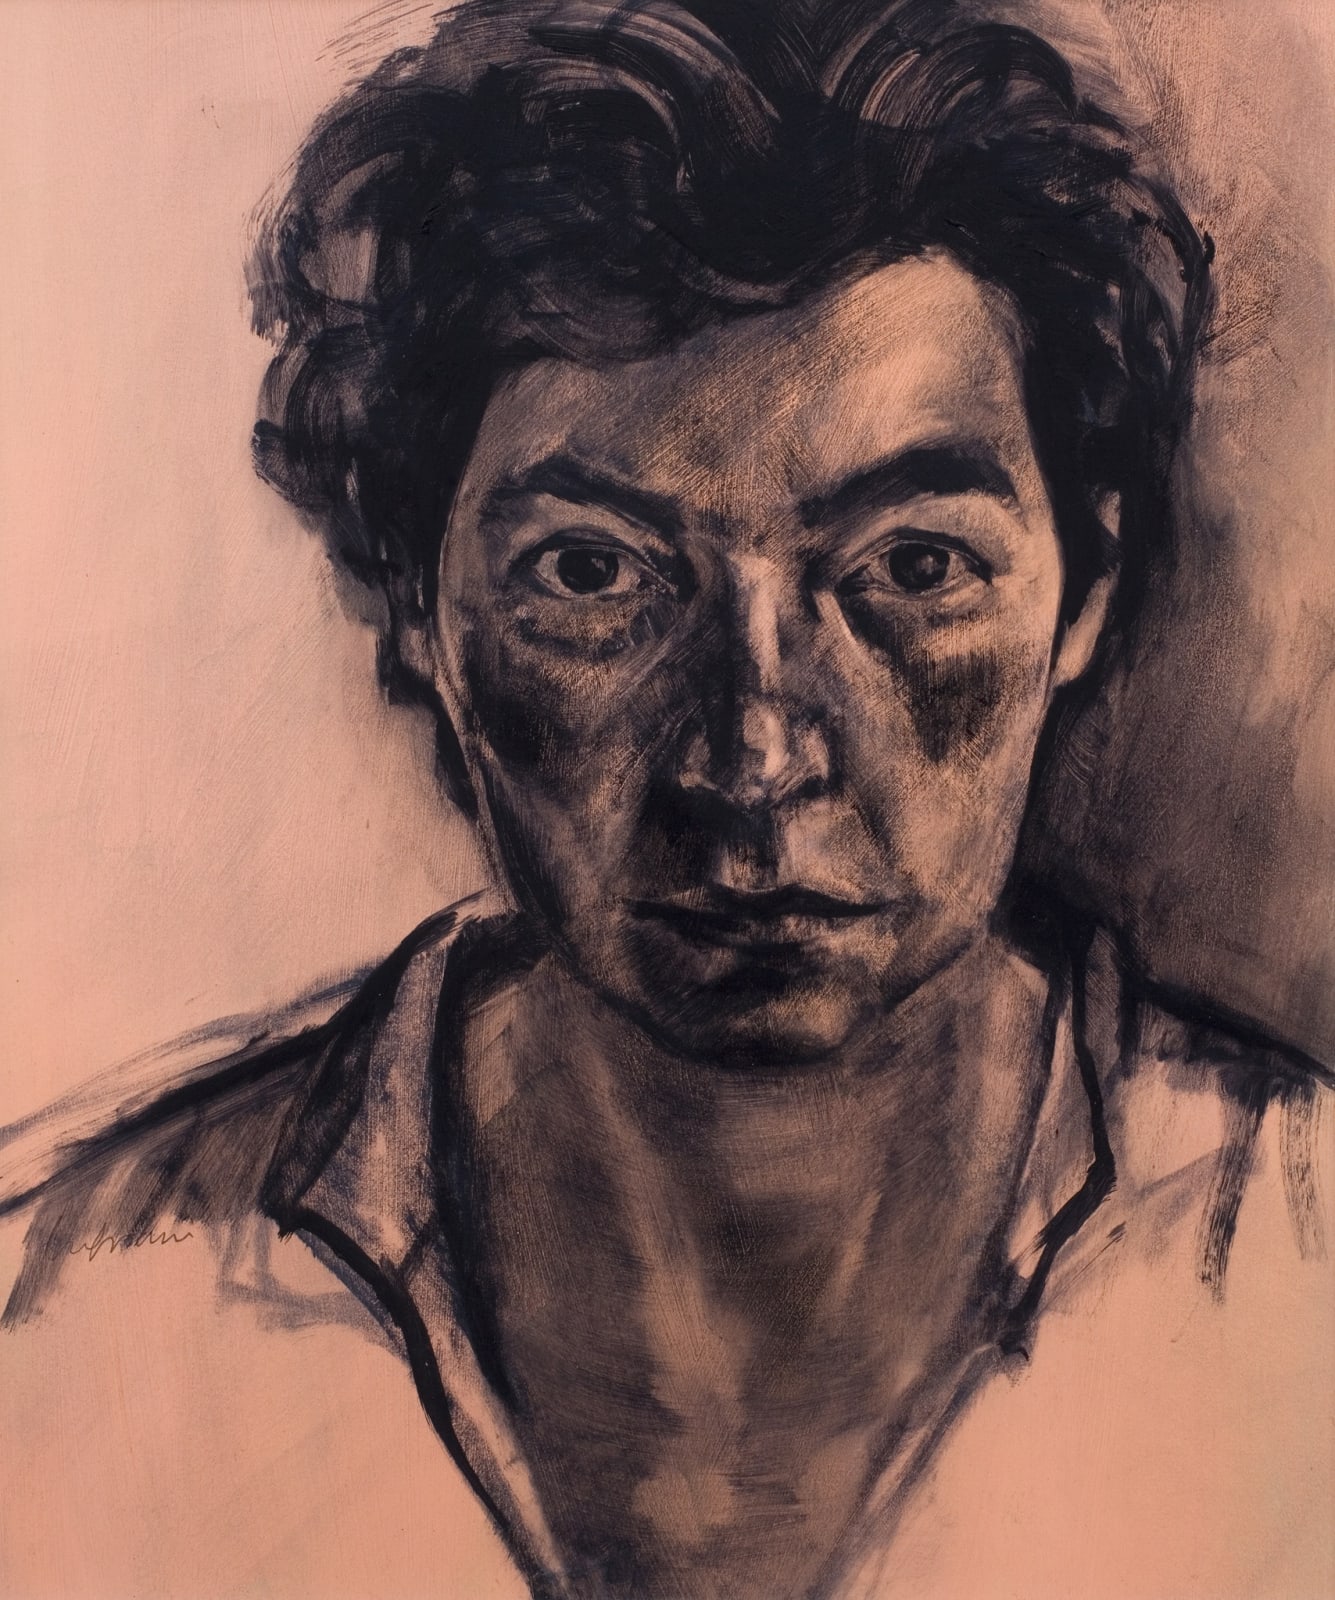 Laura Gressani, Self-Portrait, 2011